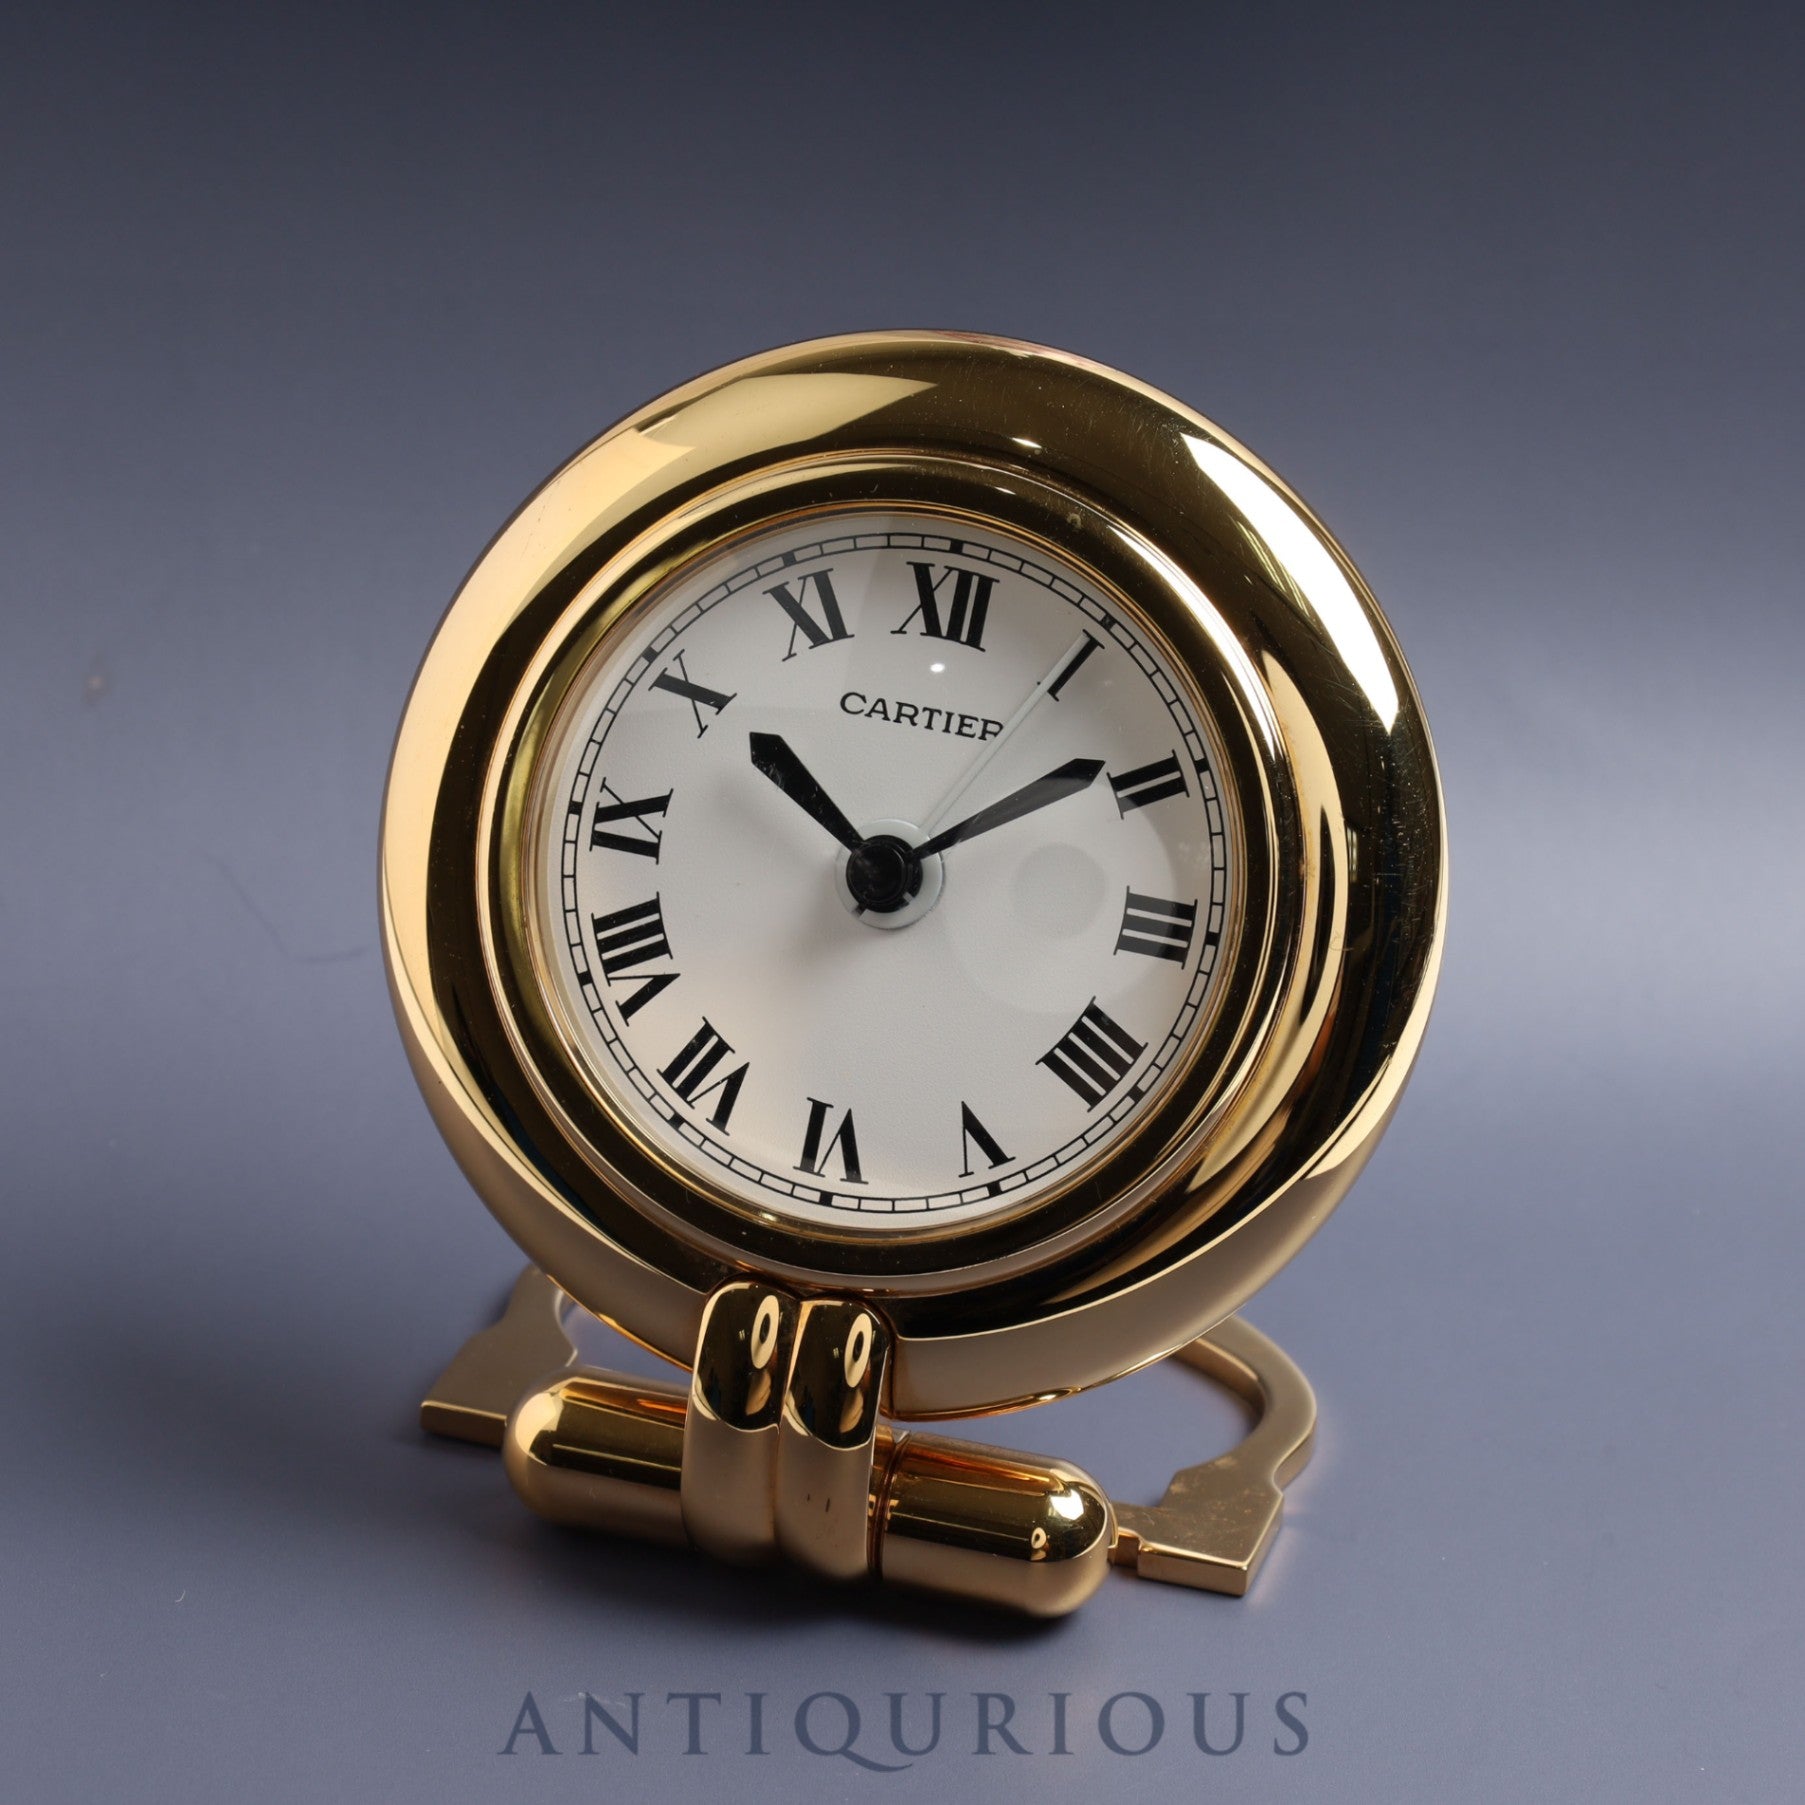 CARTIER Cartier Colise table clock